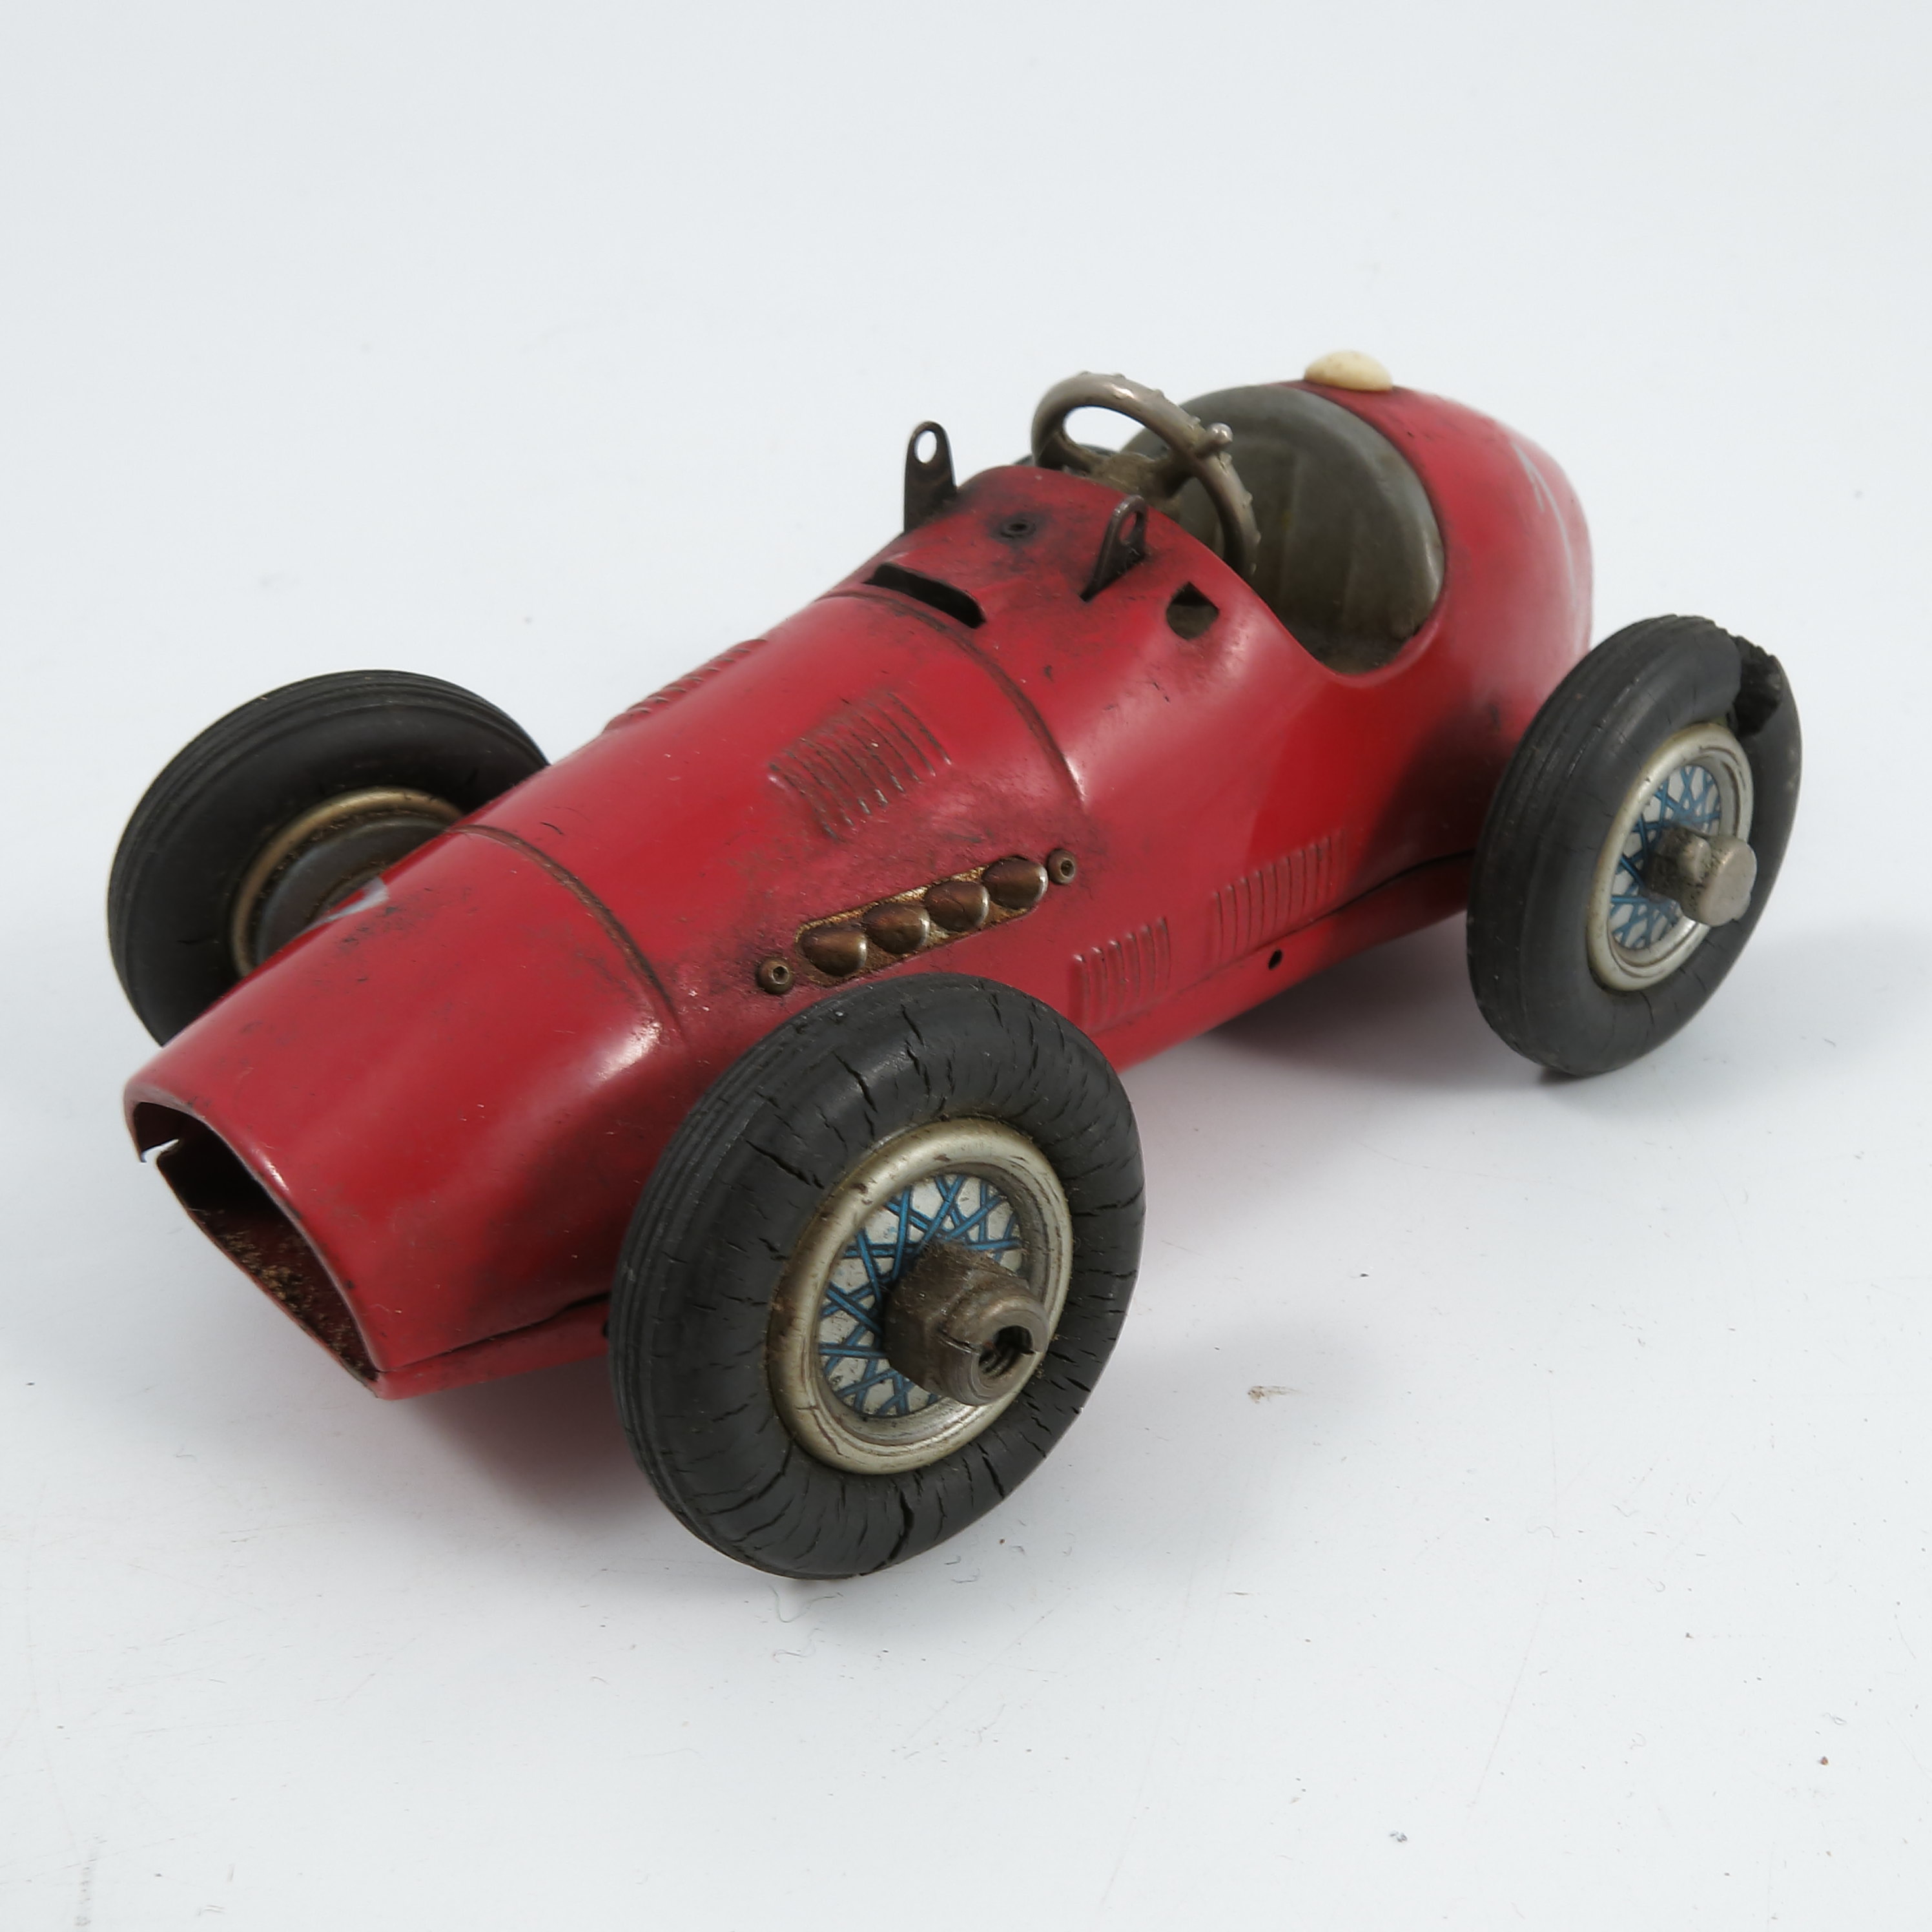 A Schuco Grand Prix Racer, 1070